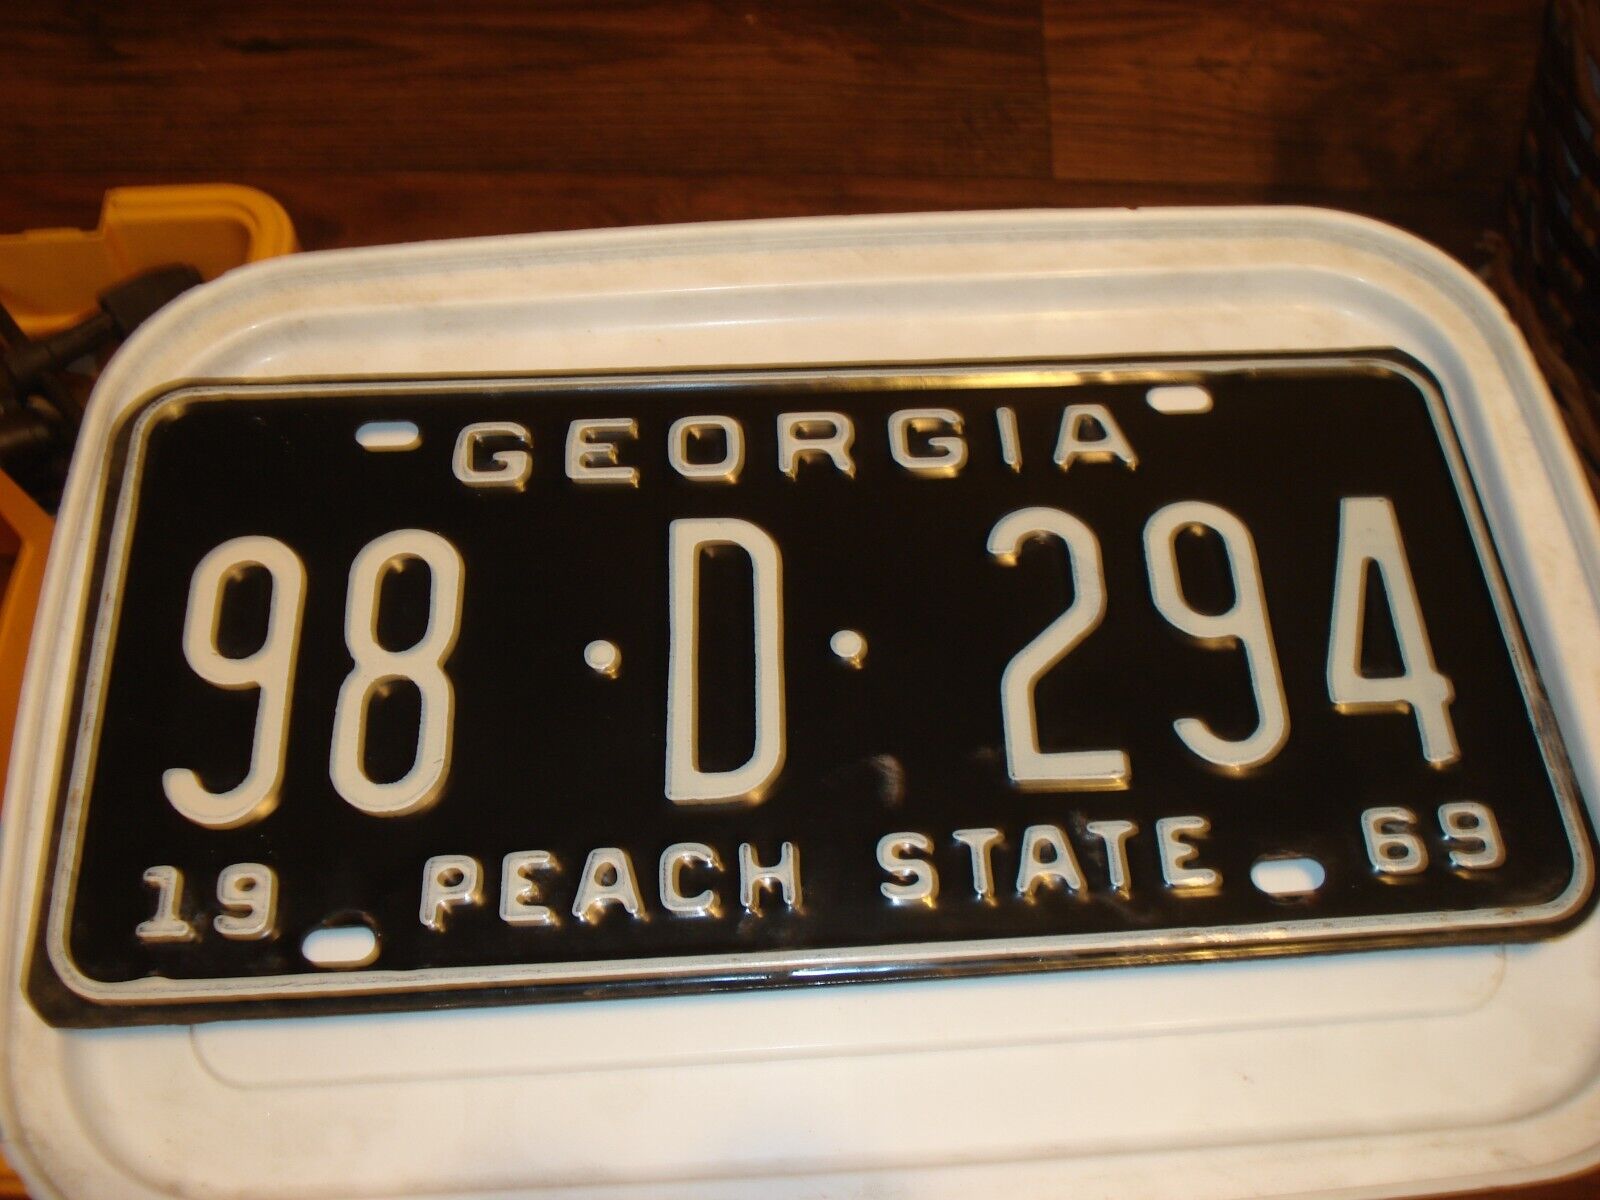 1969 Georgia License Plate Number Tag  98: 294